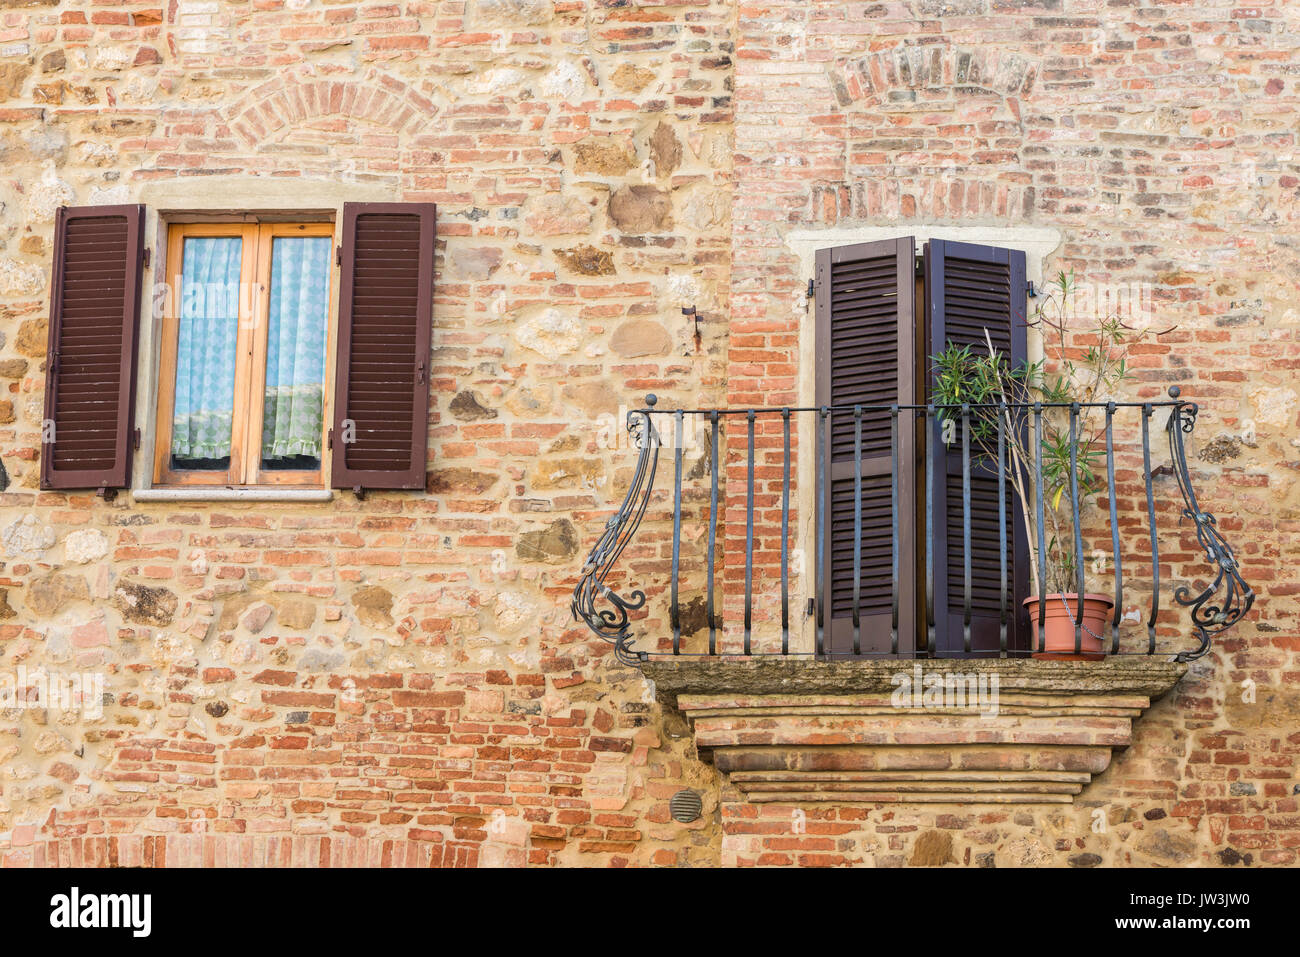 Italy, Tuscany, Montepulciano, Stony and brick facade of house with carved metal balcony and latticed sun blinds Stock Photo